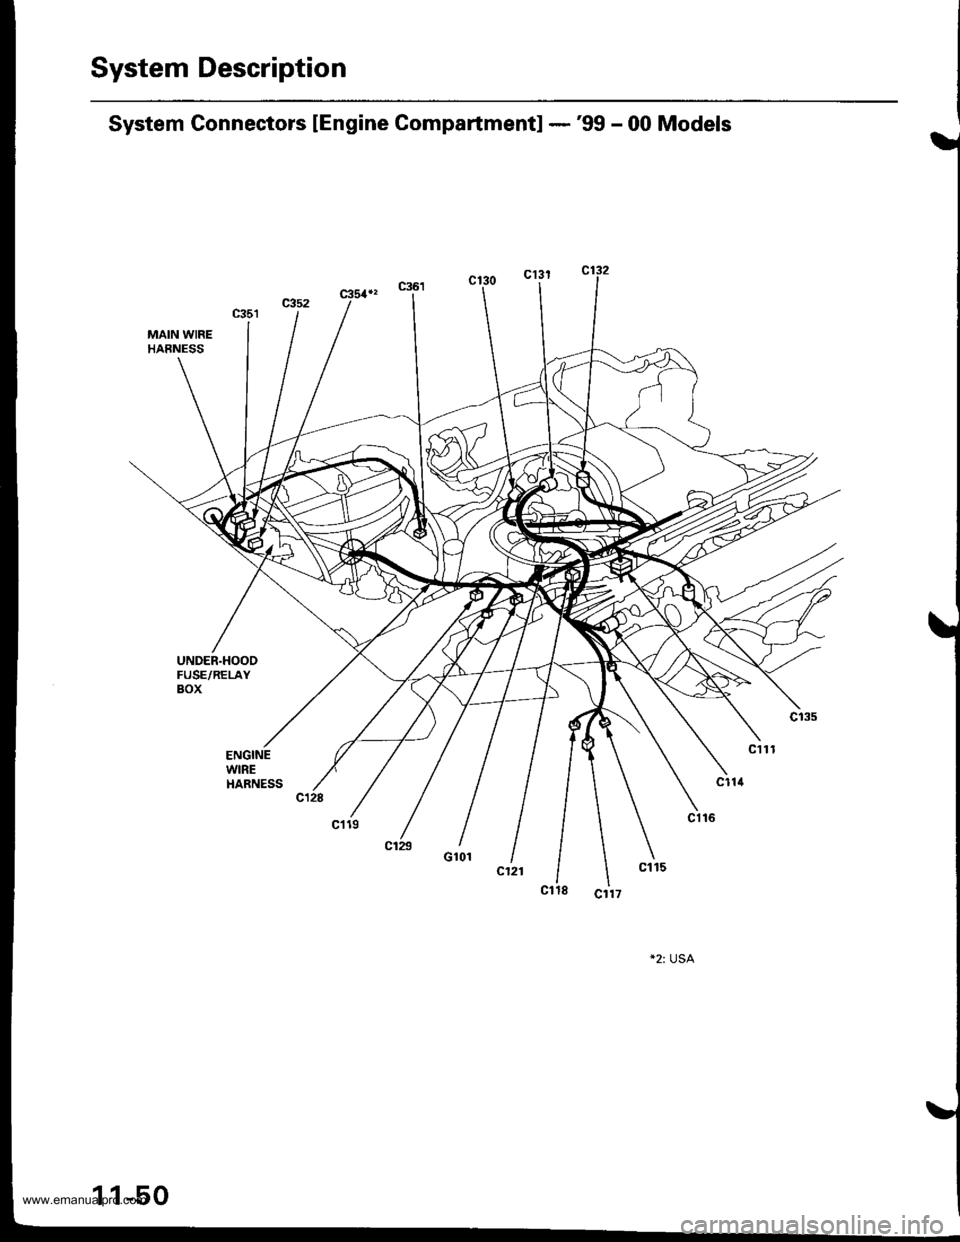 HONDA CR-V 1999 RD1-RD3 / 1.G User Guide 
System Description
System Gonnectors lEngine Compartment] -99 - 00 Models
MAIN WIREHAENESS
UNDER.HOOOFUSE/RELAYBOX
ENGINEWIREHARNESS
www.emanualpro.com  